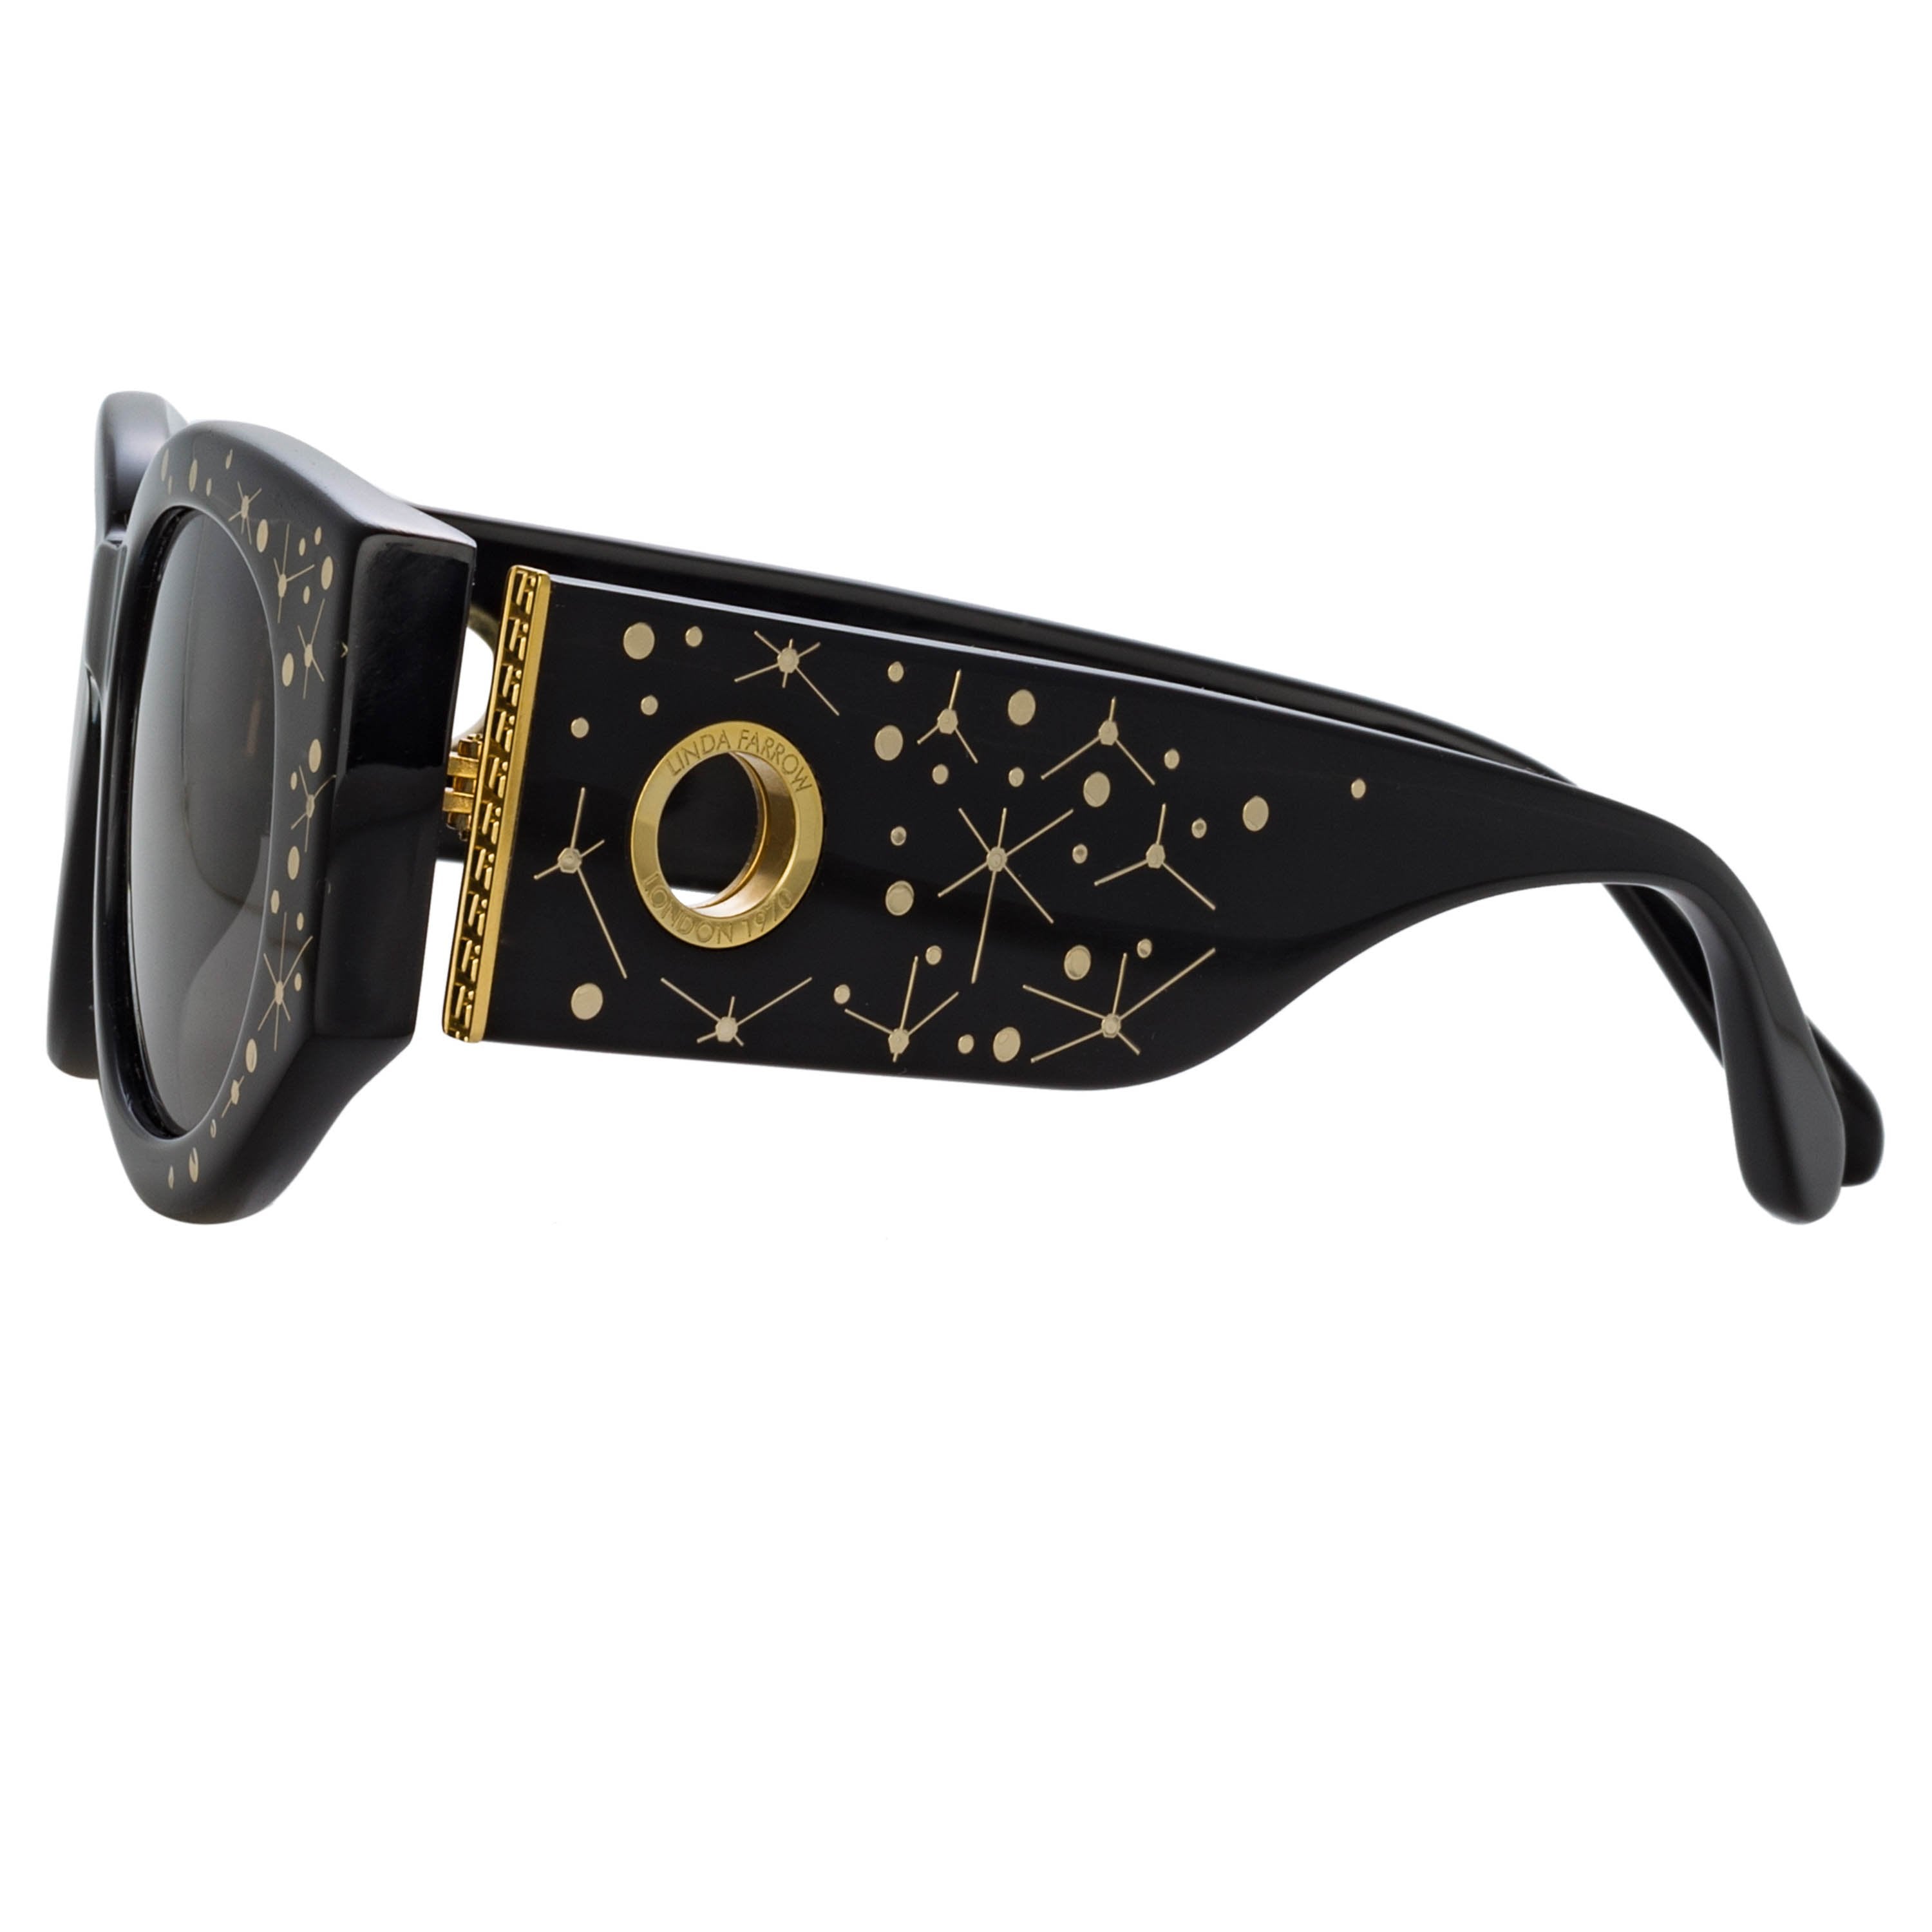 Color_LFL1059C5SUN - Debbie D-Frame Sunglasses in Sparkled Black